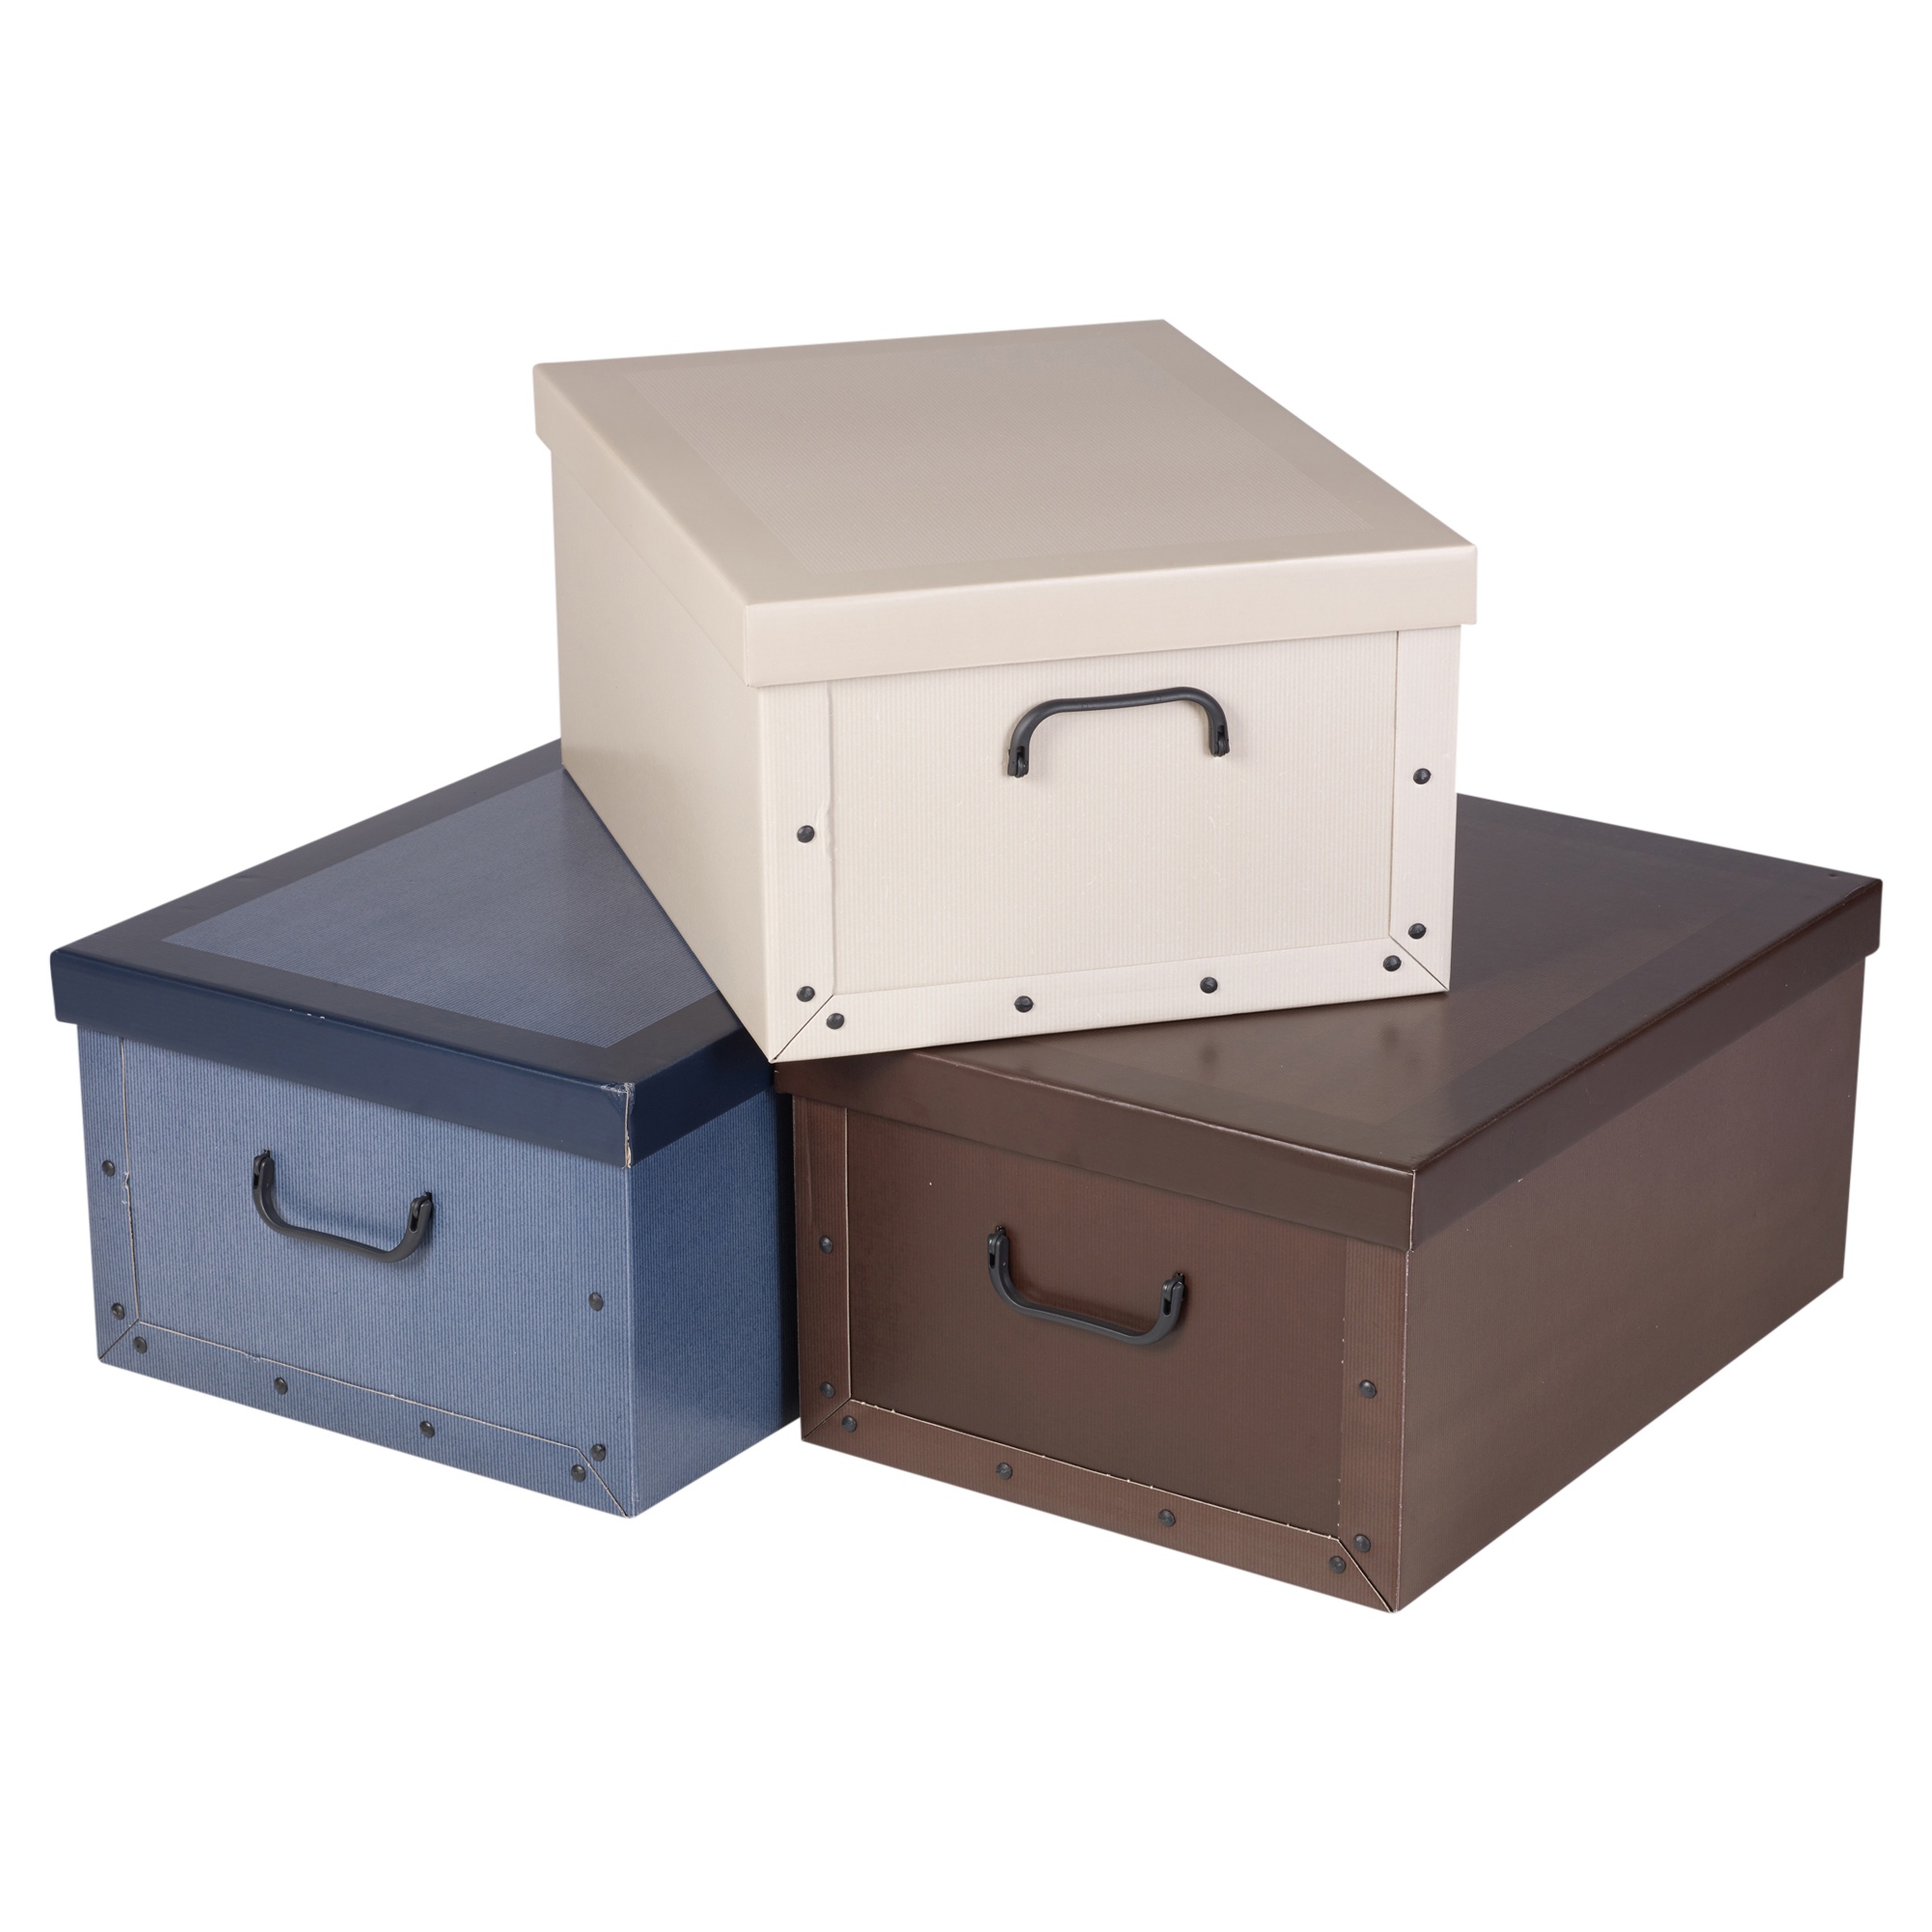 3 Collapsible Underbed Cardboard Storage  Boxes Elegant 